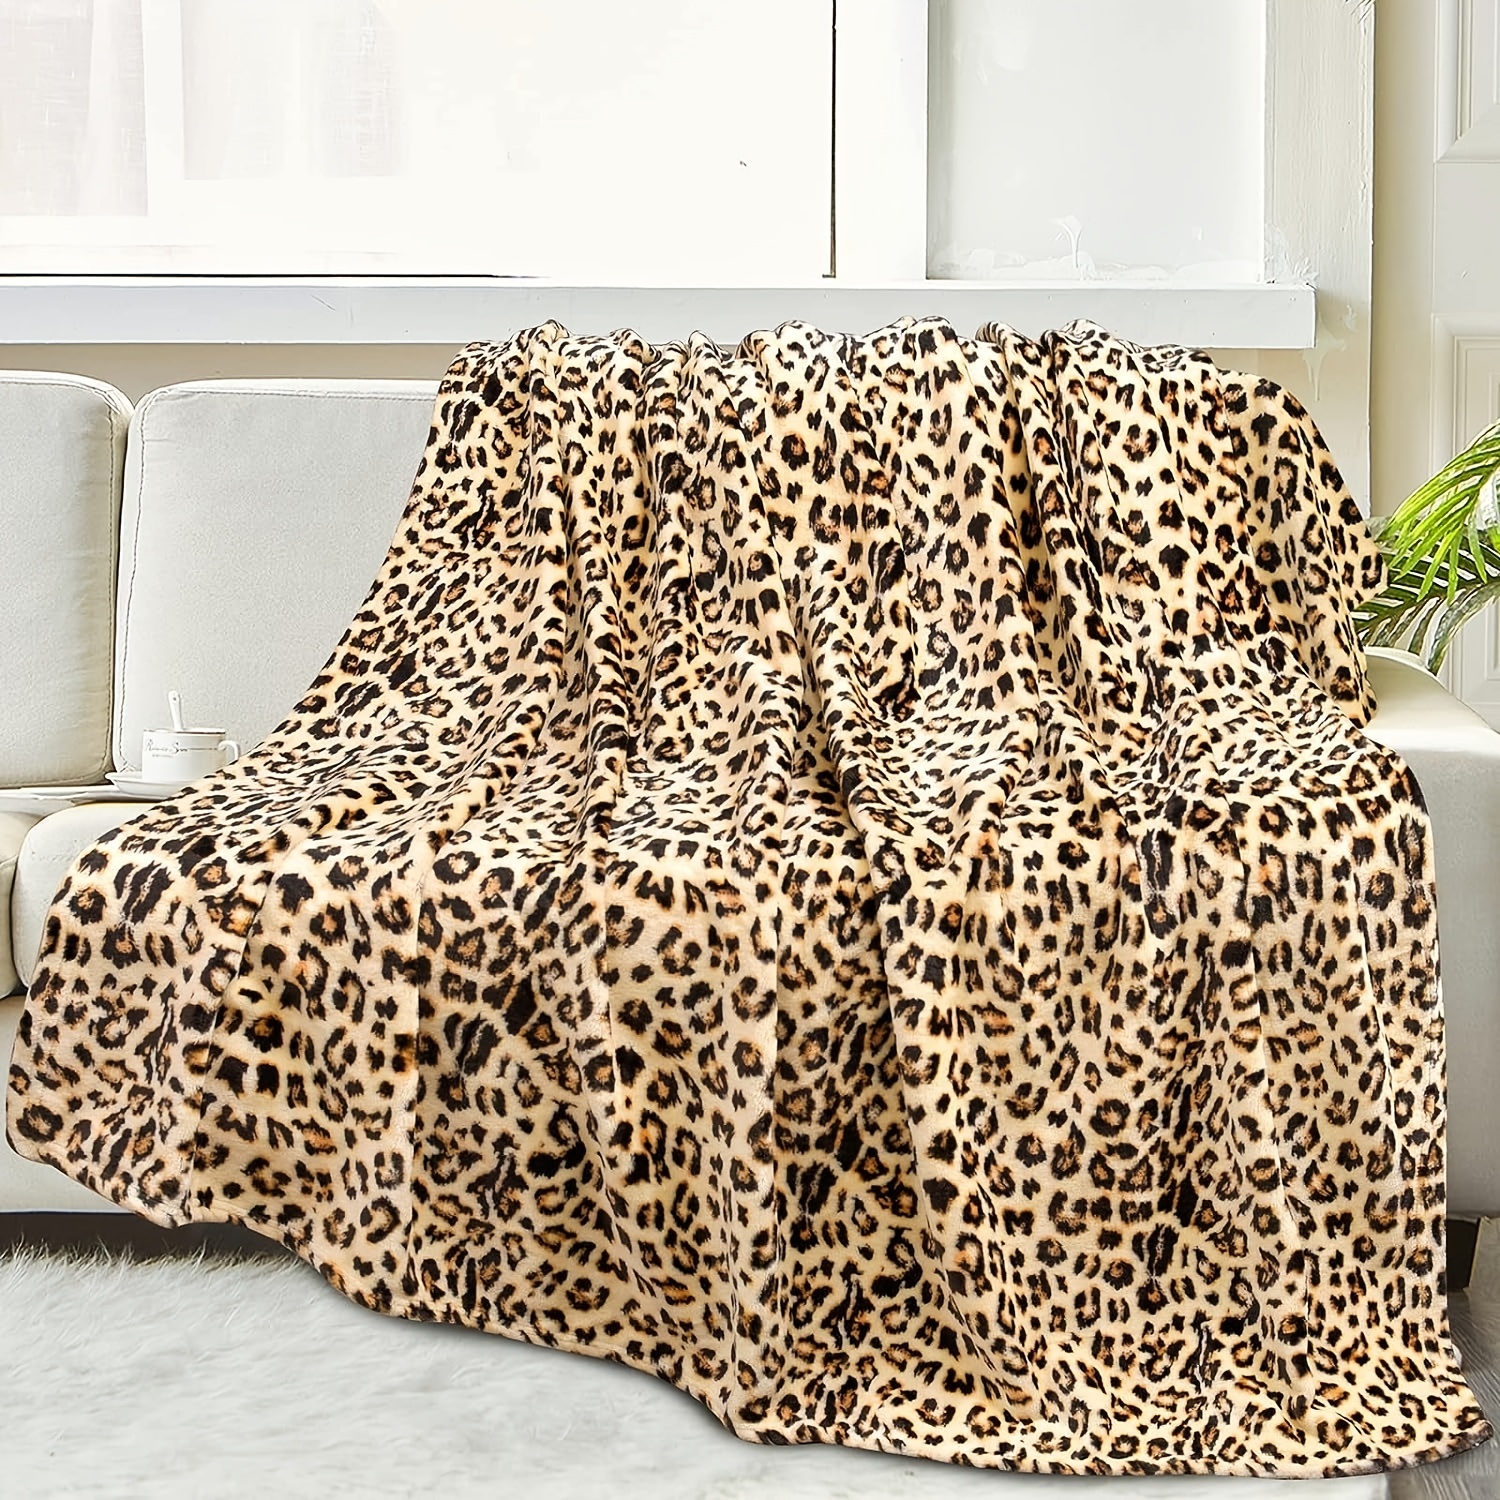 Leopard Blanket Cheetah Double Print